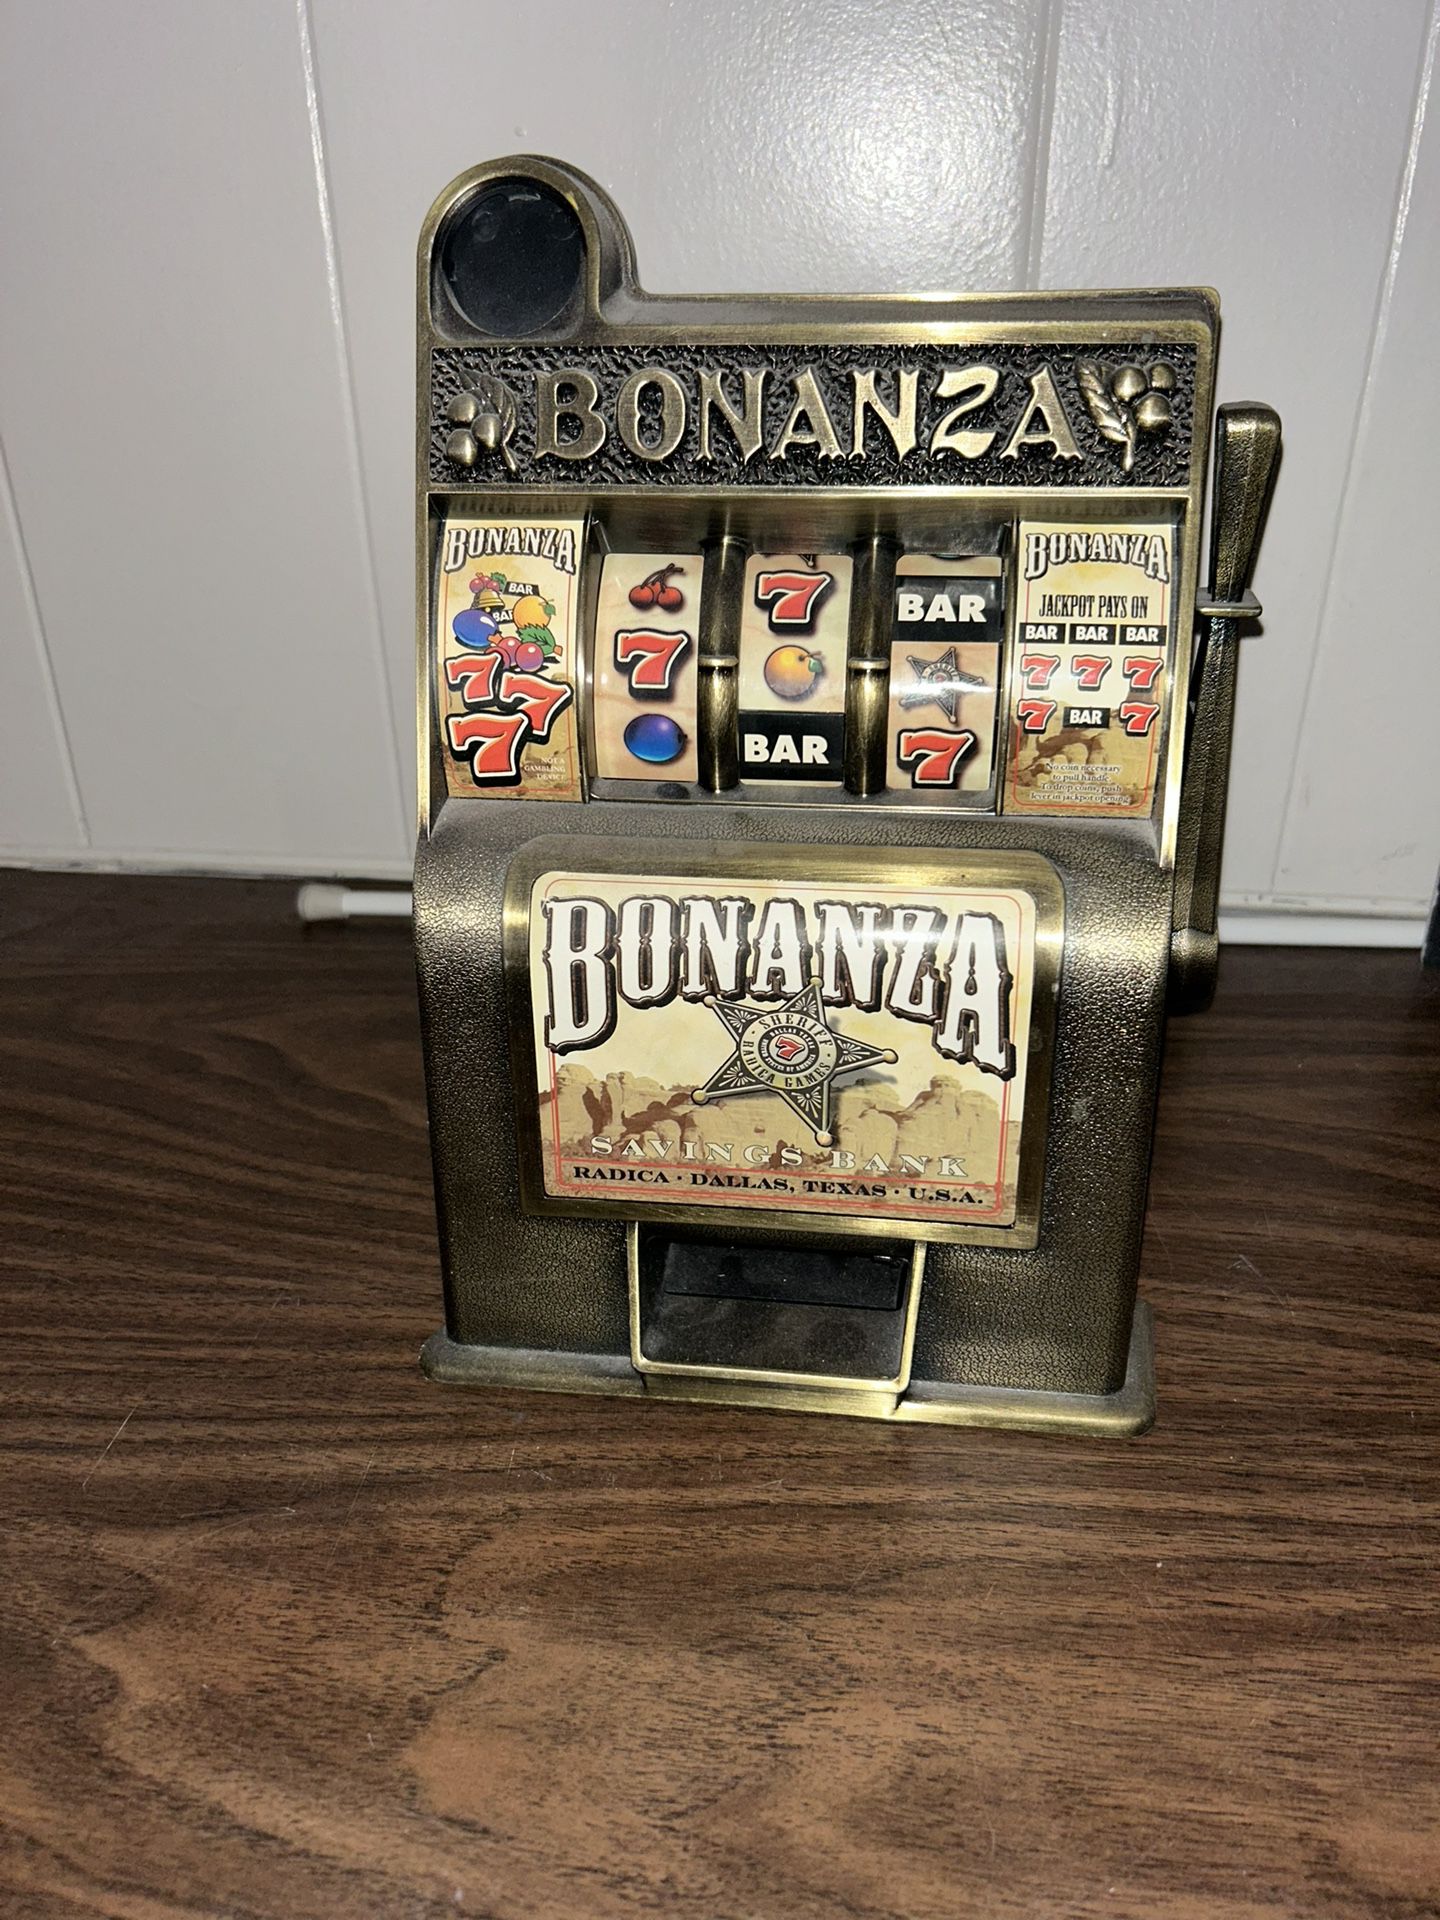 Bonanza Slot Machine